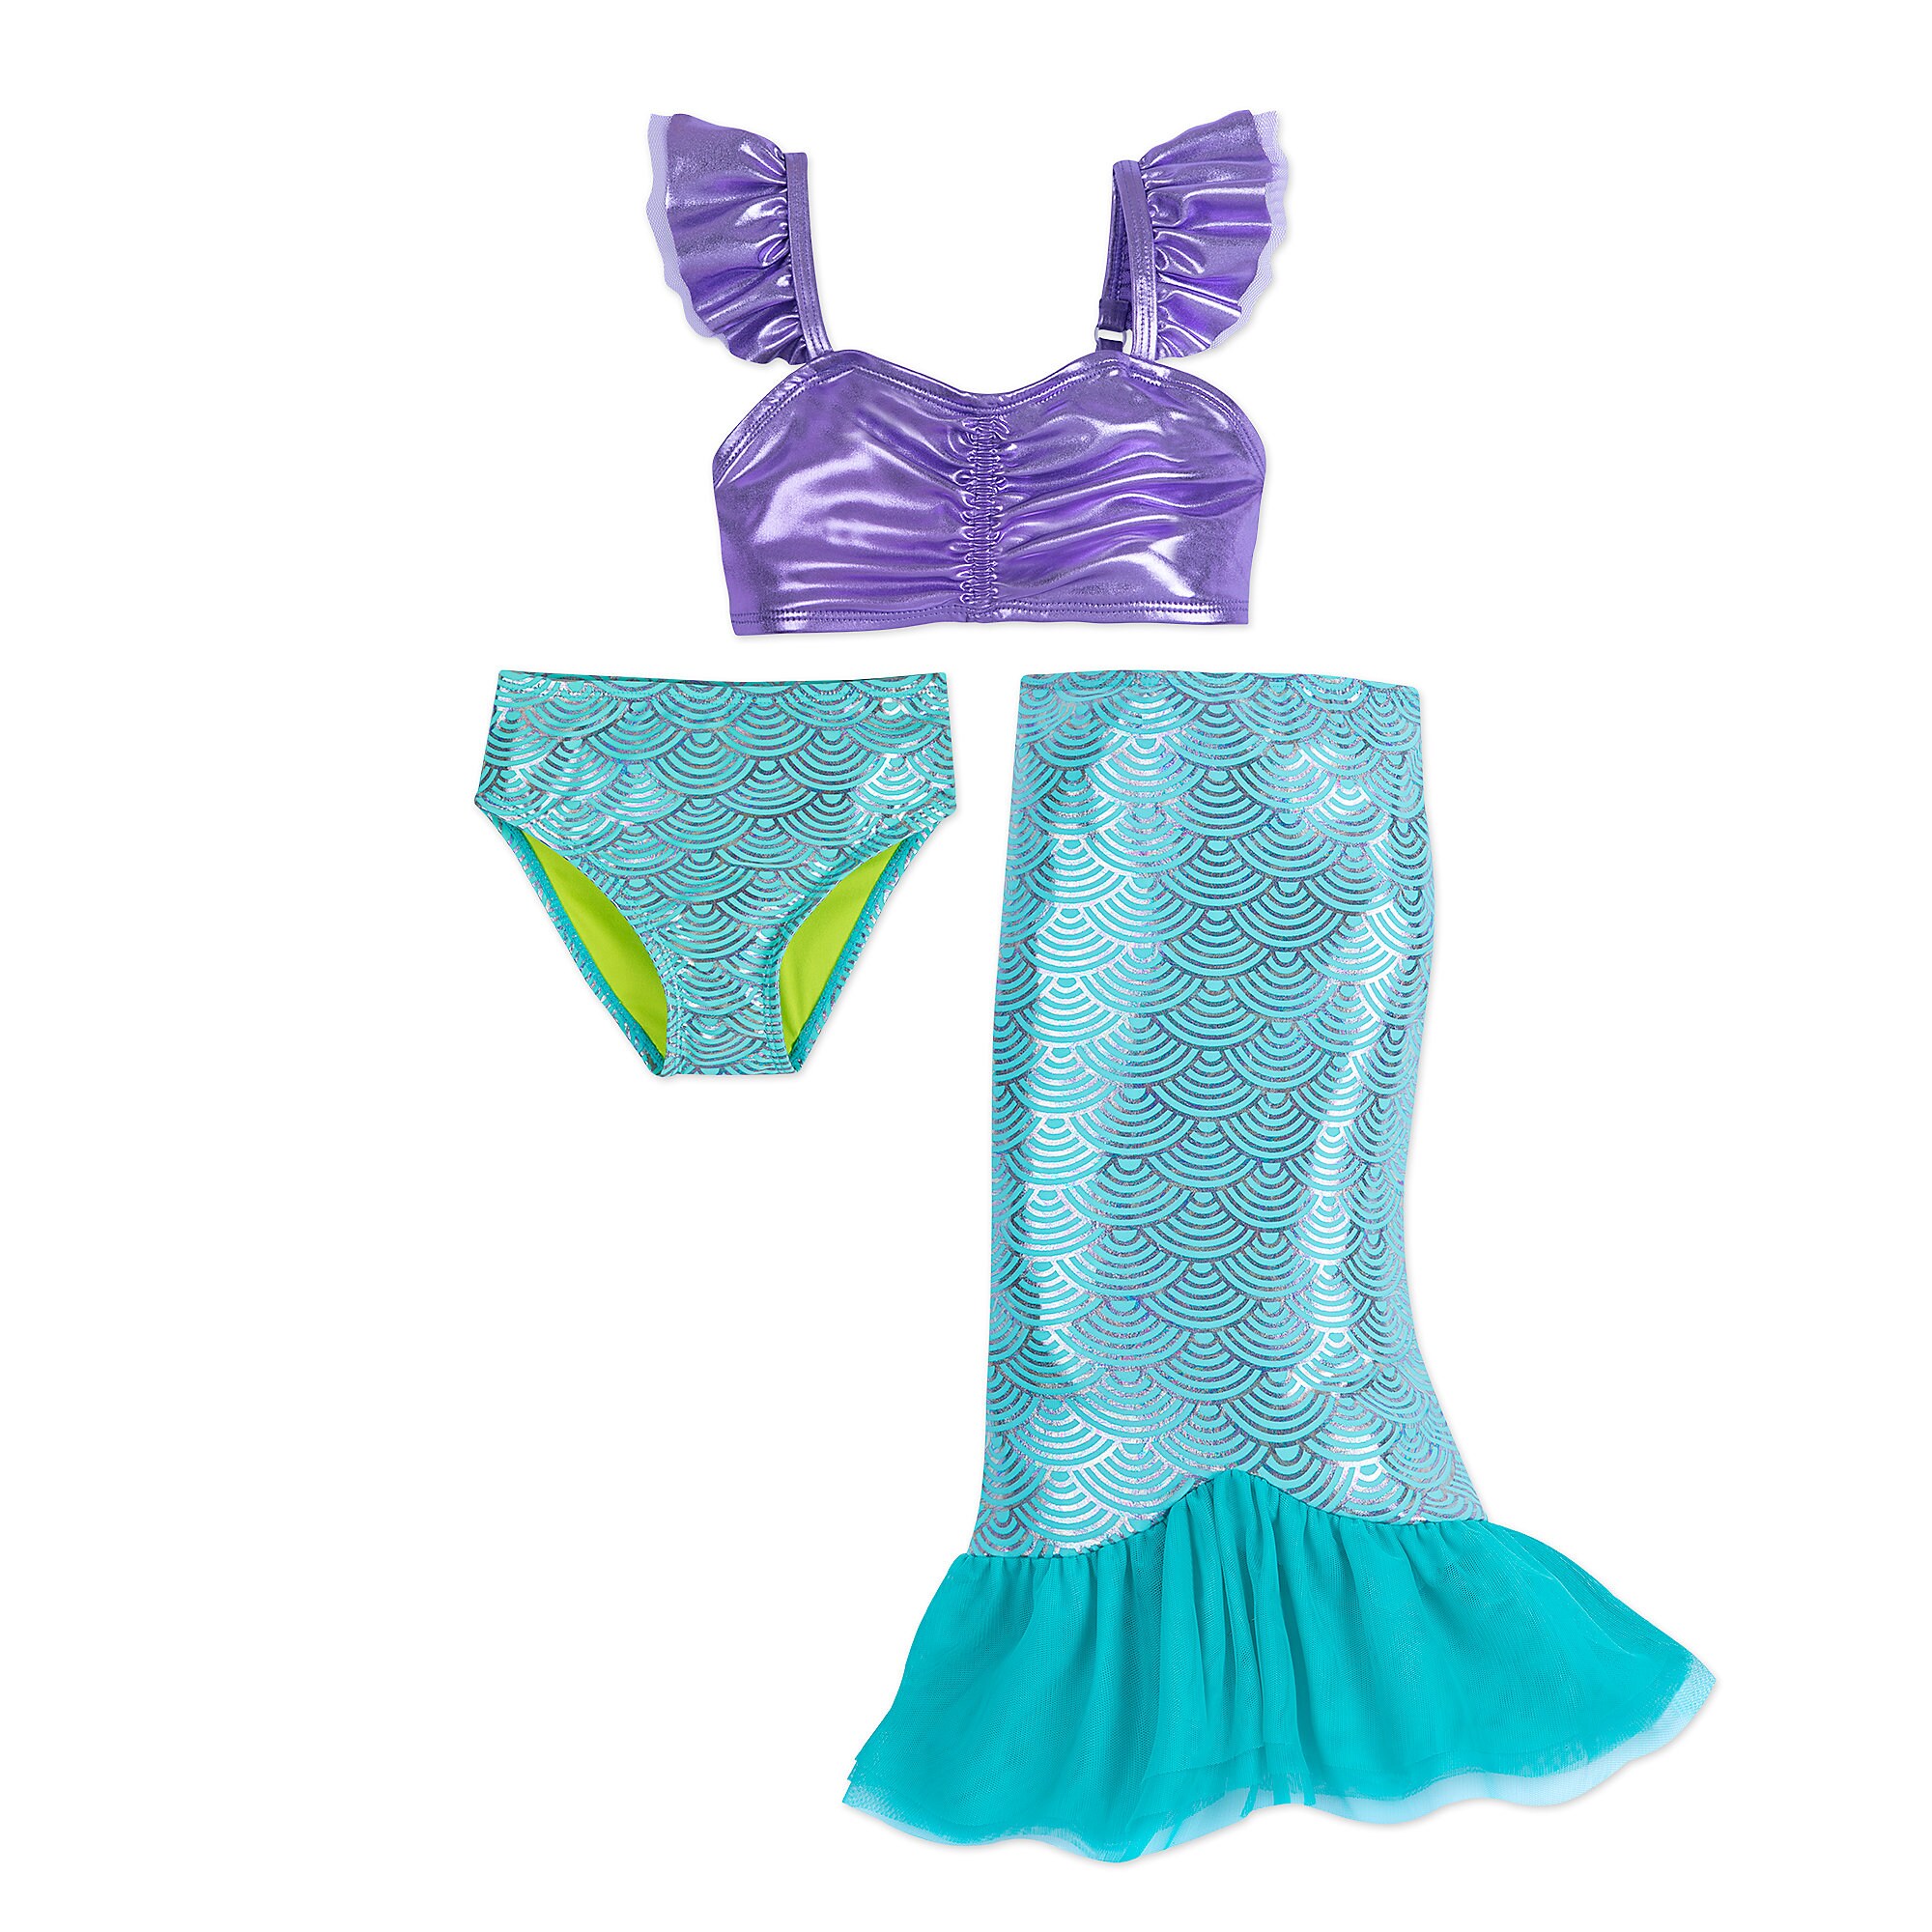 Ariel Deluxe Swimsuit Set for Girls